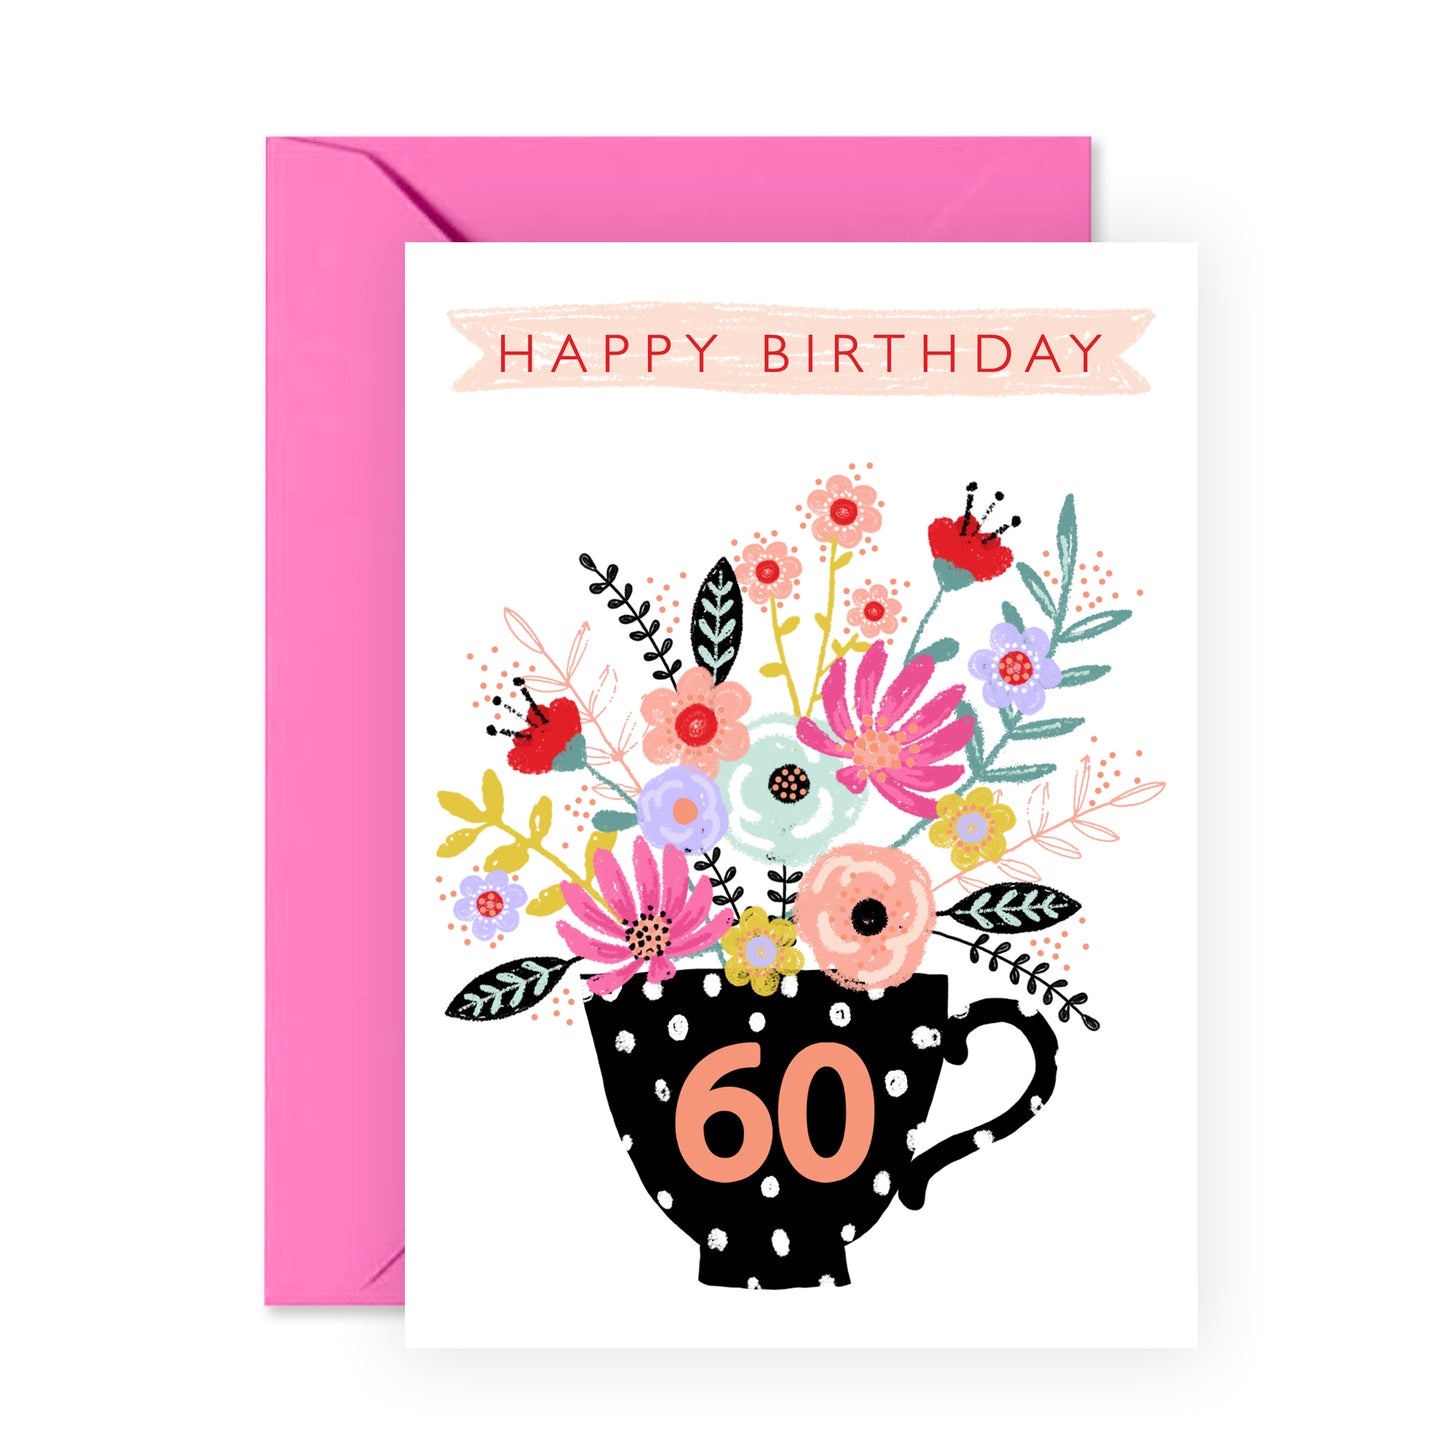 Cute 60th Birthday Card - Happy Birthday 60 - For Women Her